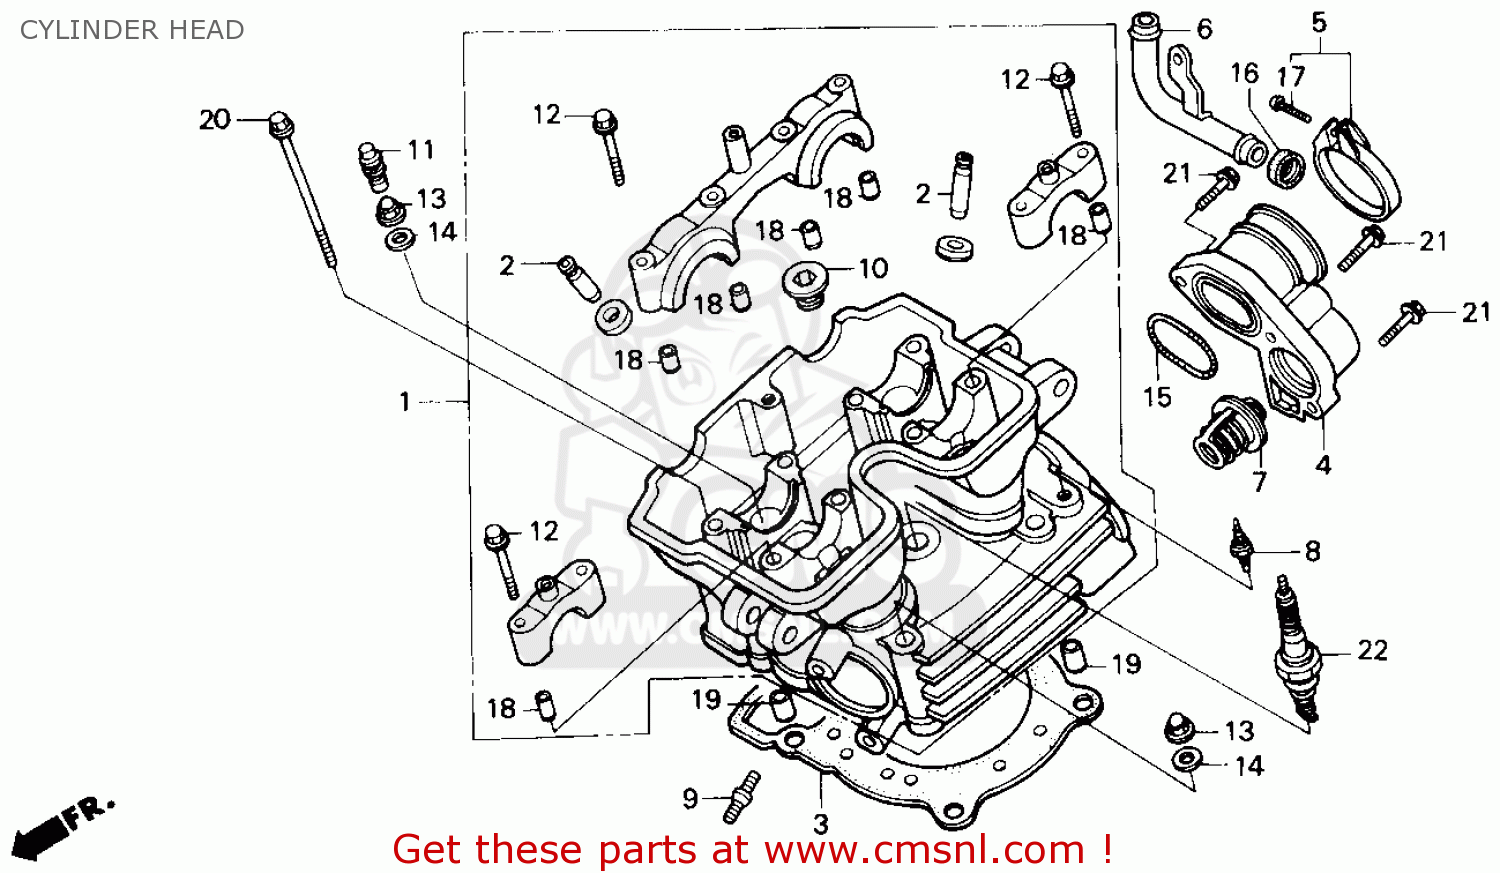 1988 Honda nx250 parts #4